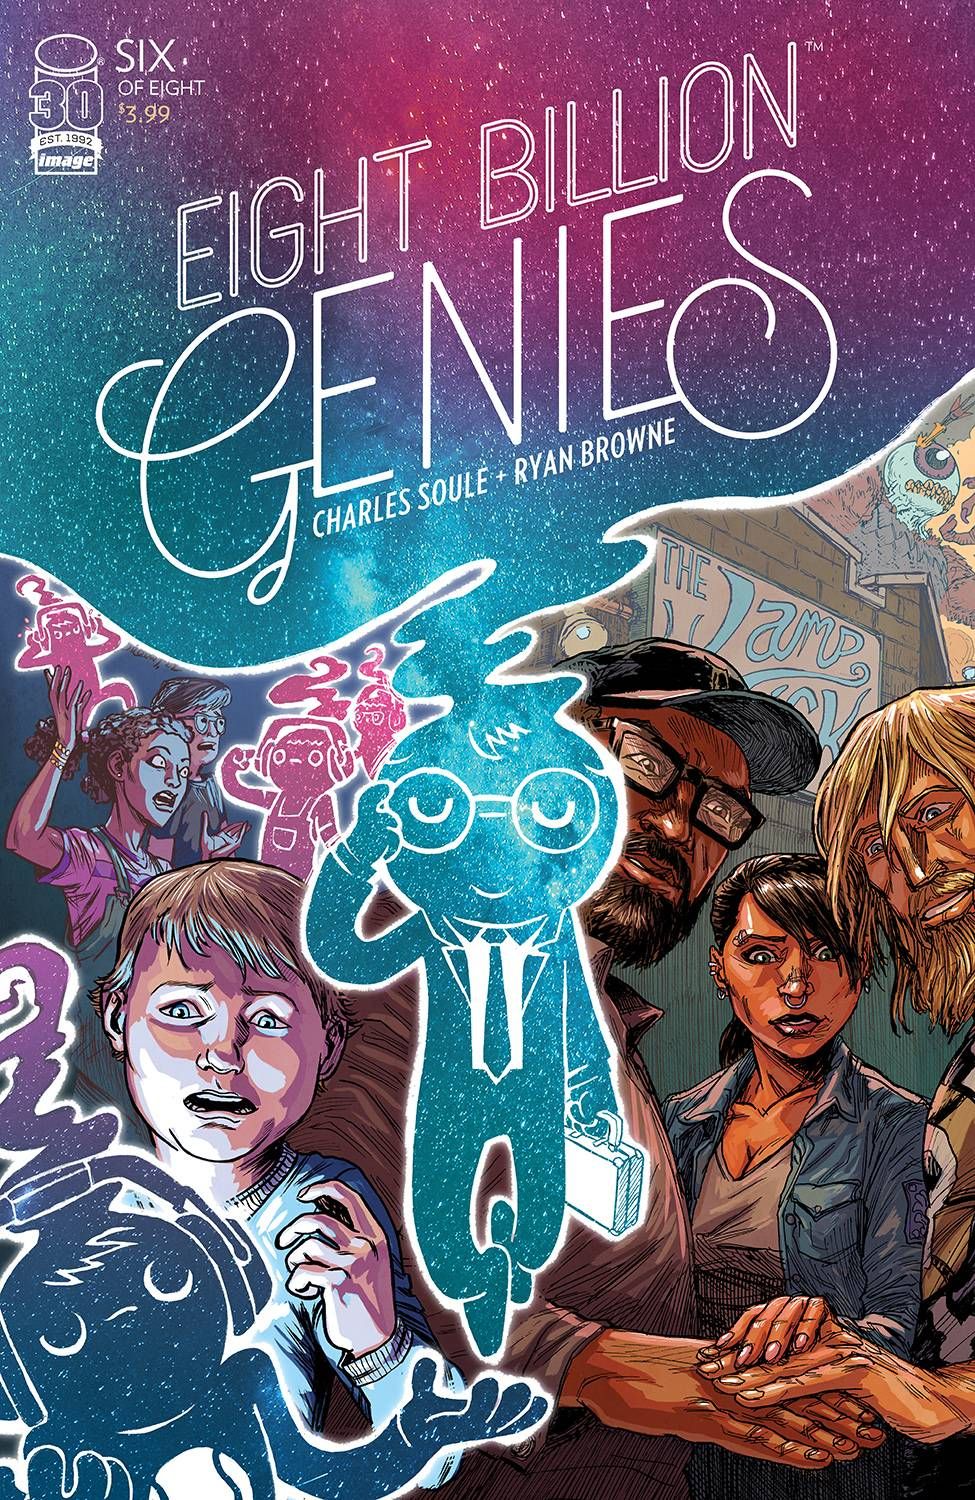 Eight Billion Genies #6 Comic